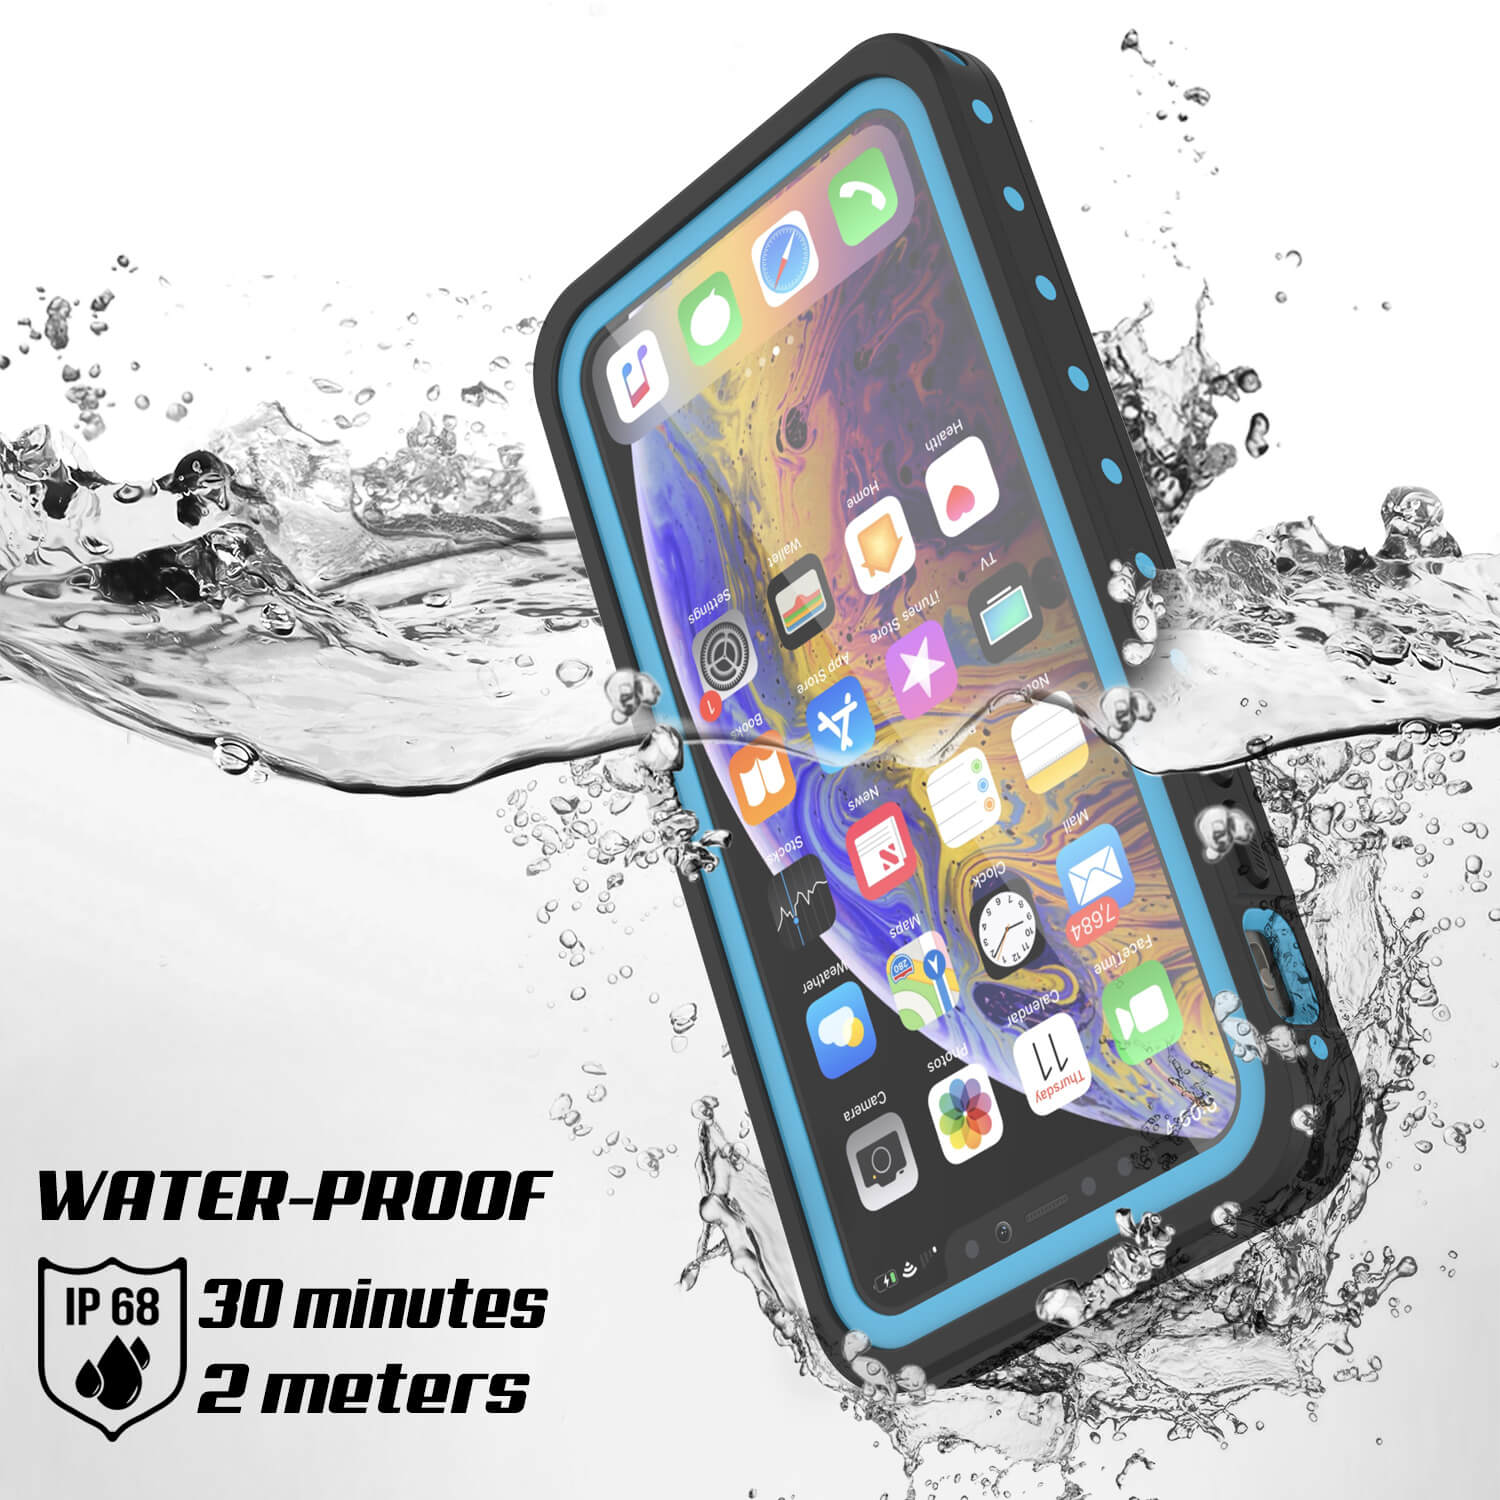 iPhone 11 Pro Max Waterproof IP68 Case, Punkcase [Light blue] [StudStar Series] [Slim Fit] [Dirtproof]